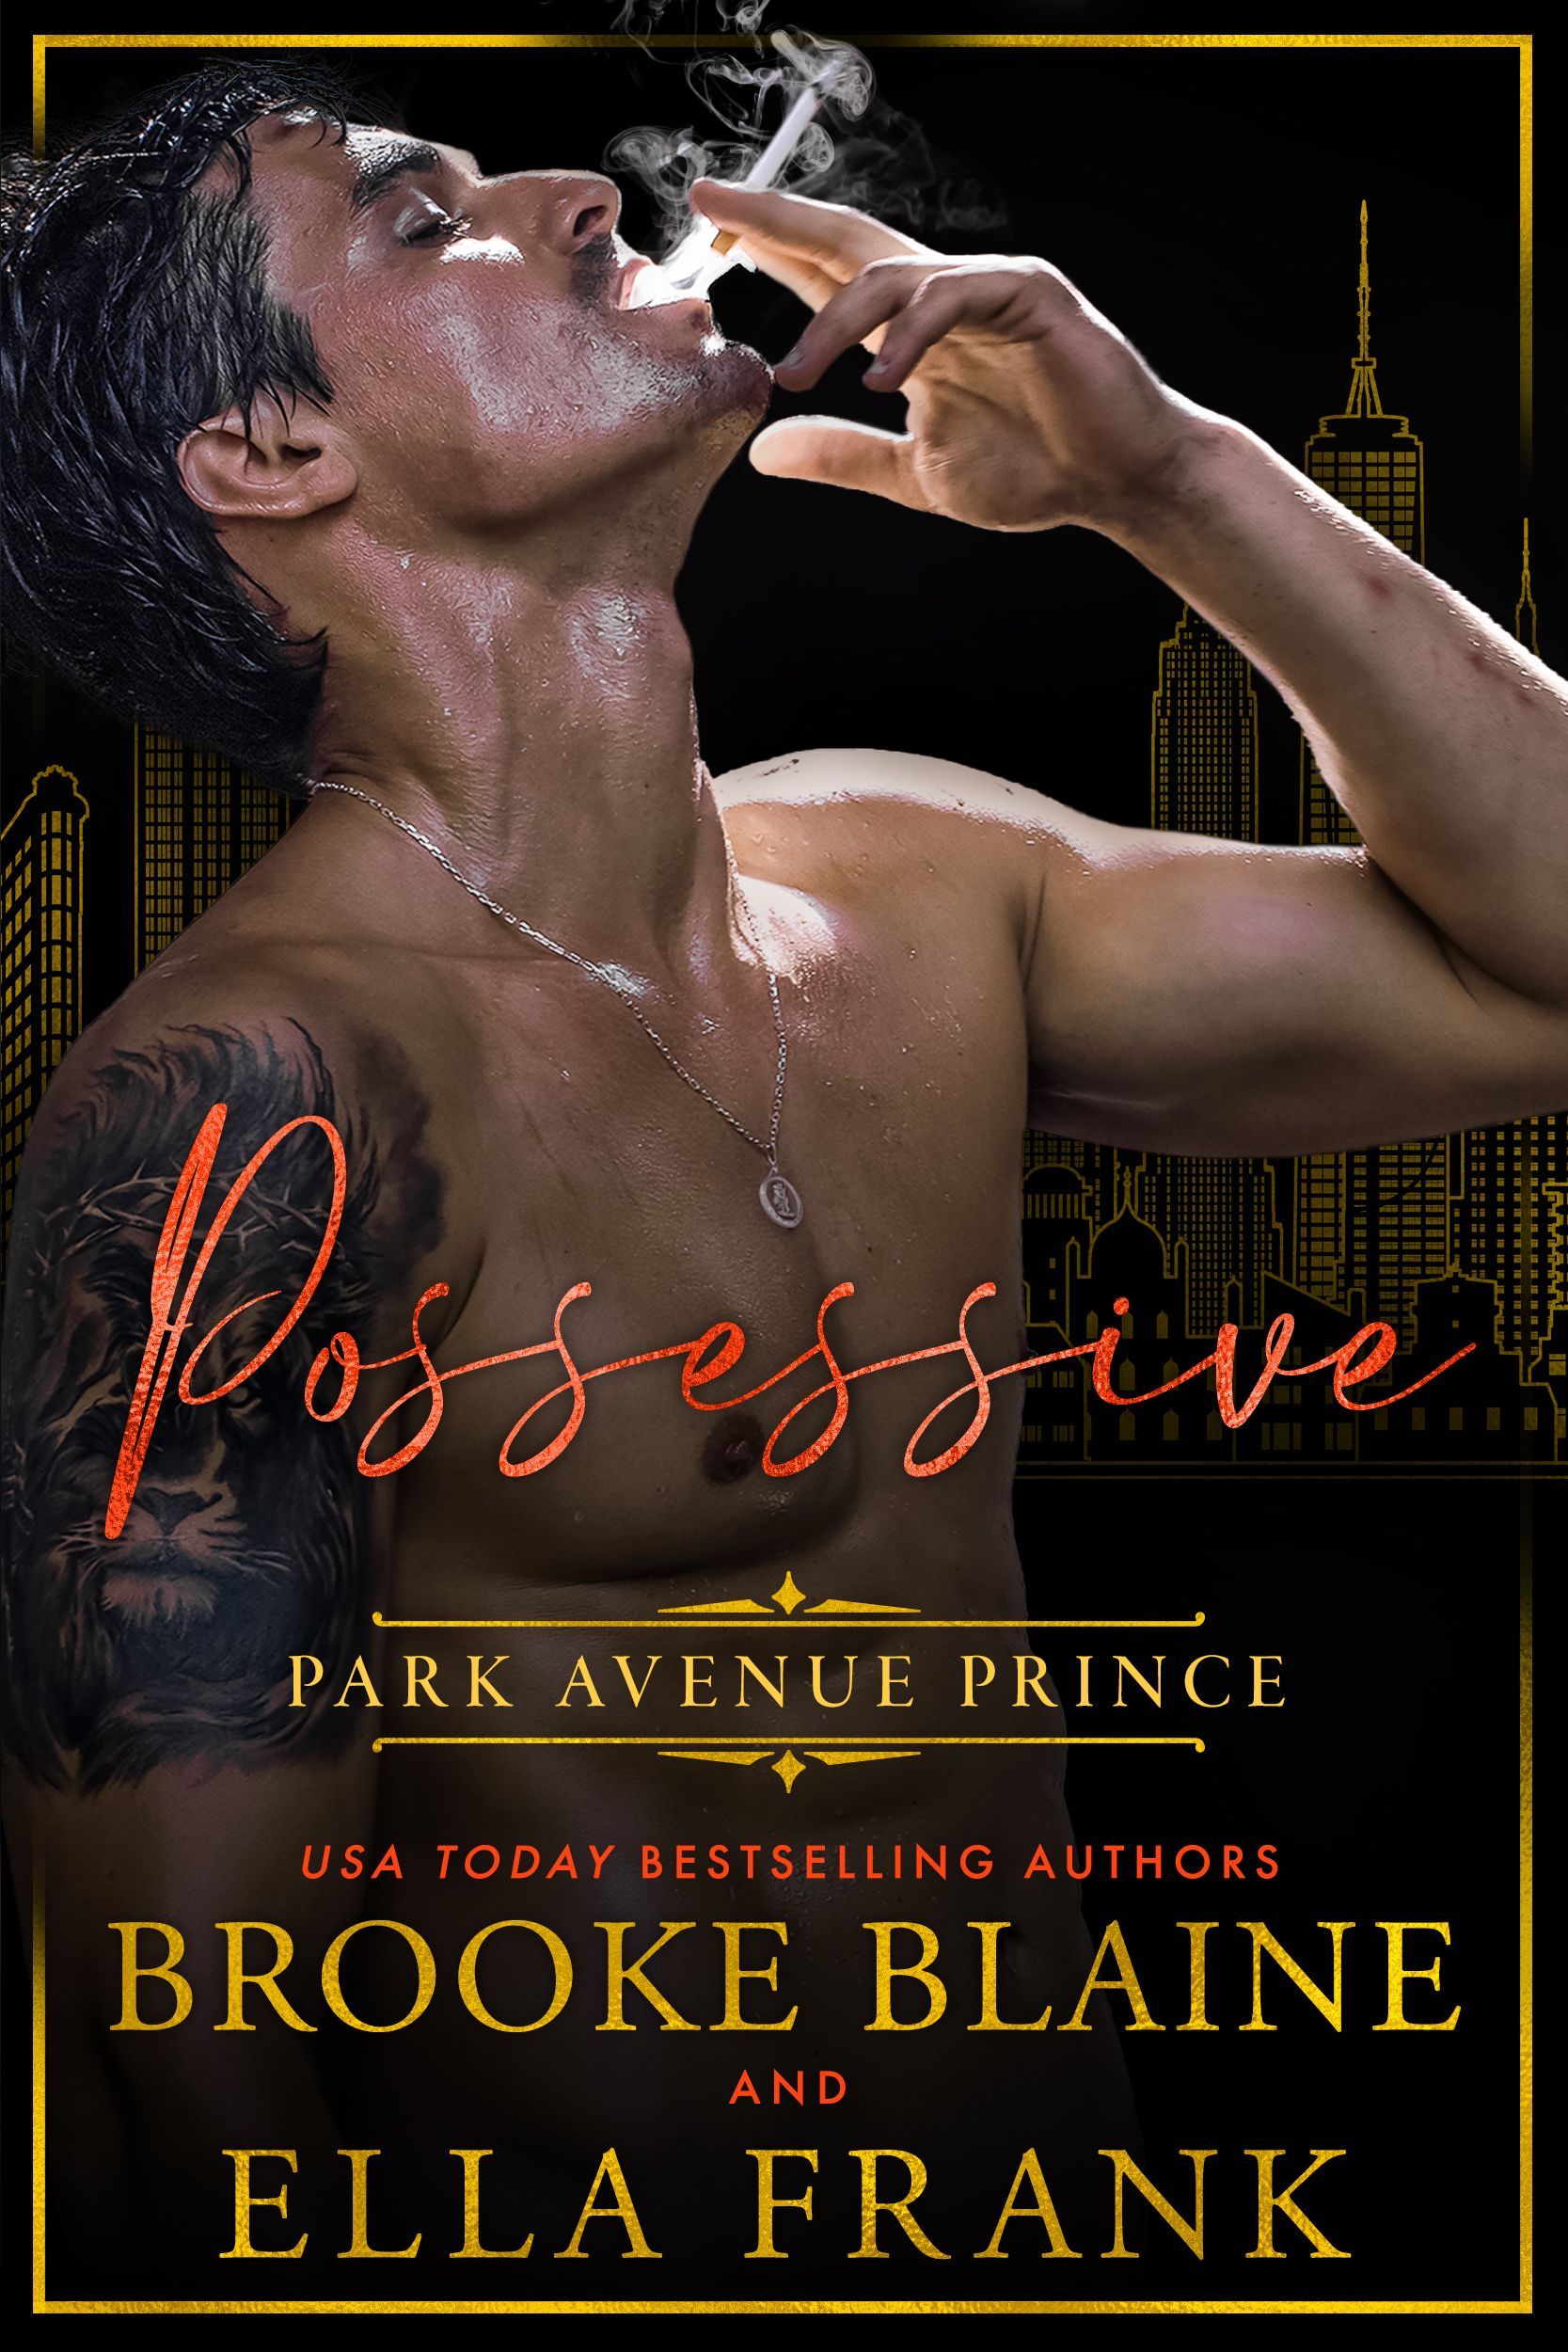 Possessive Park Avenue Prince by Brooke Blaine & Ella Frank